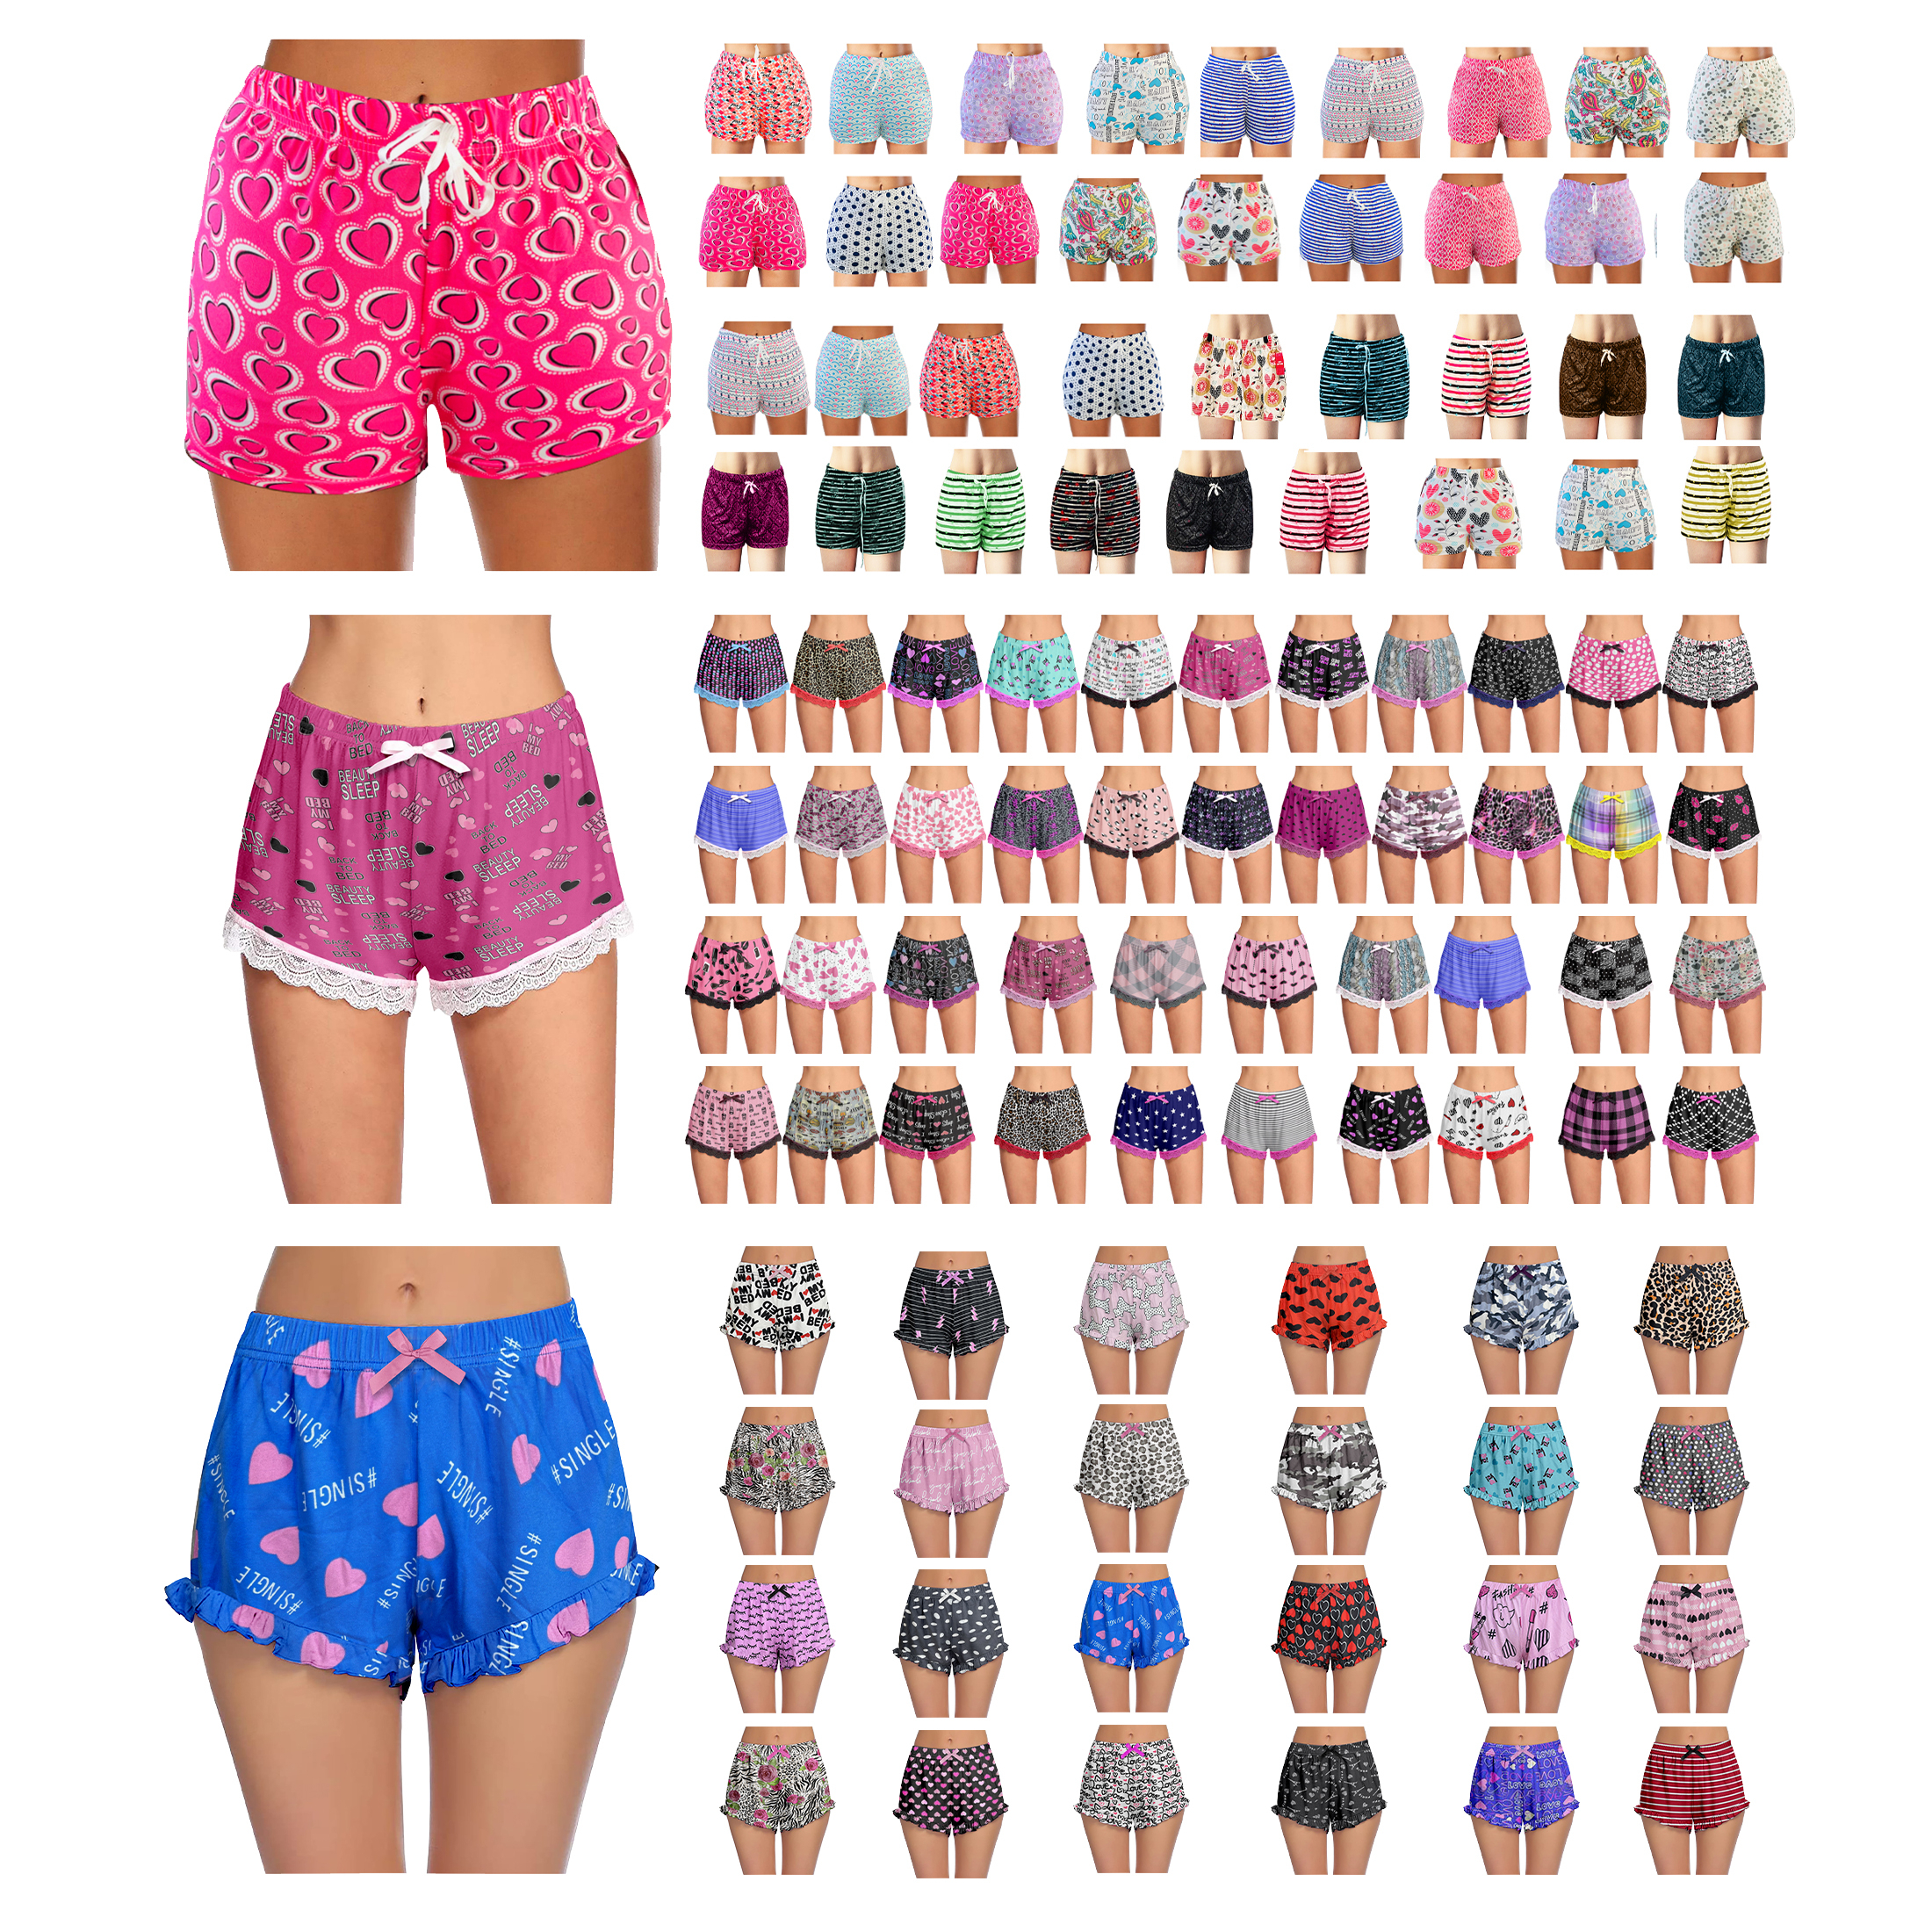 3-Pack: Women's Soft Comfy Printed Lounge Sleep Pajama Shorts - Laced Hem, Large